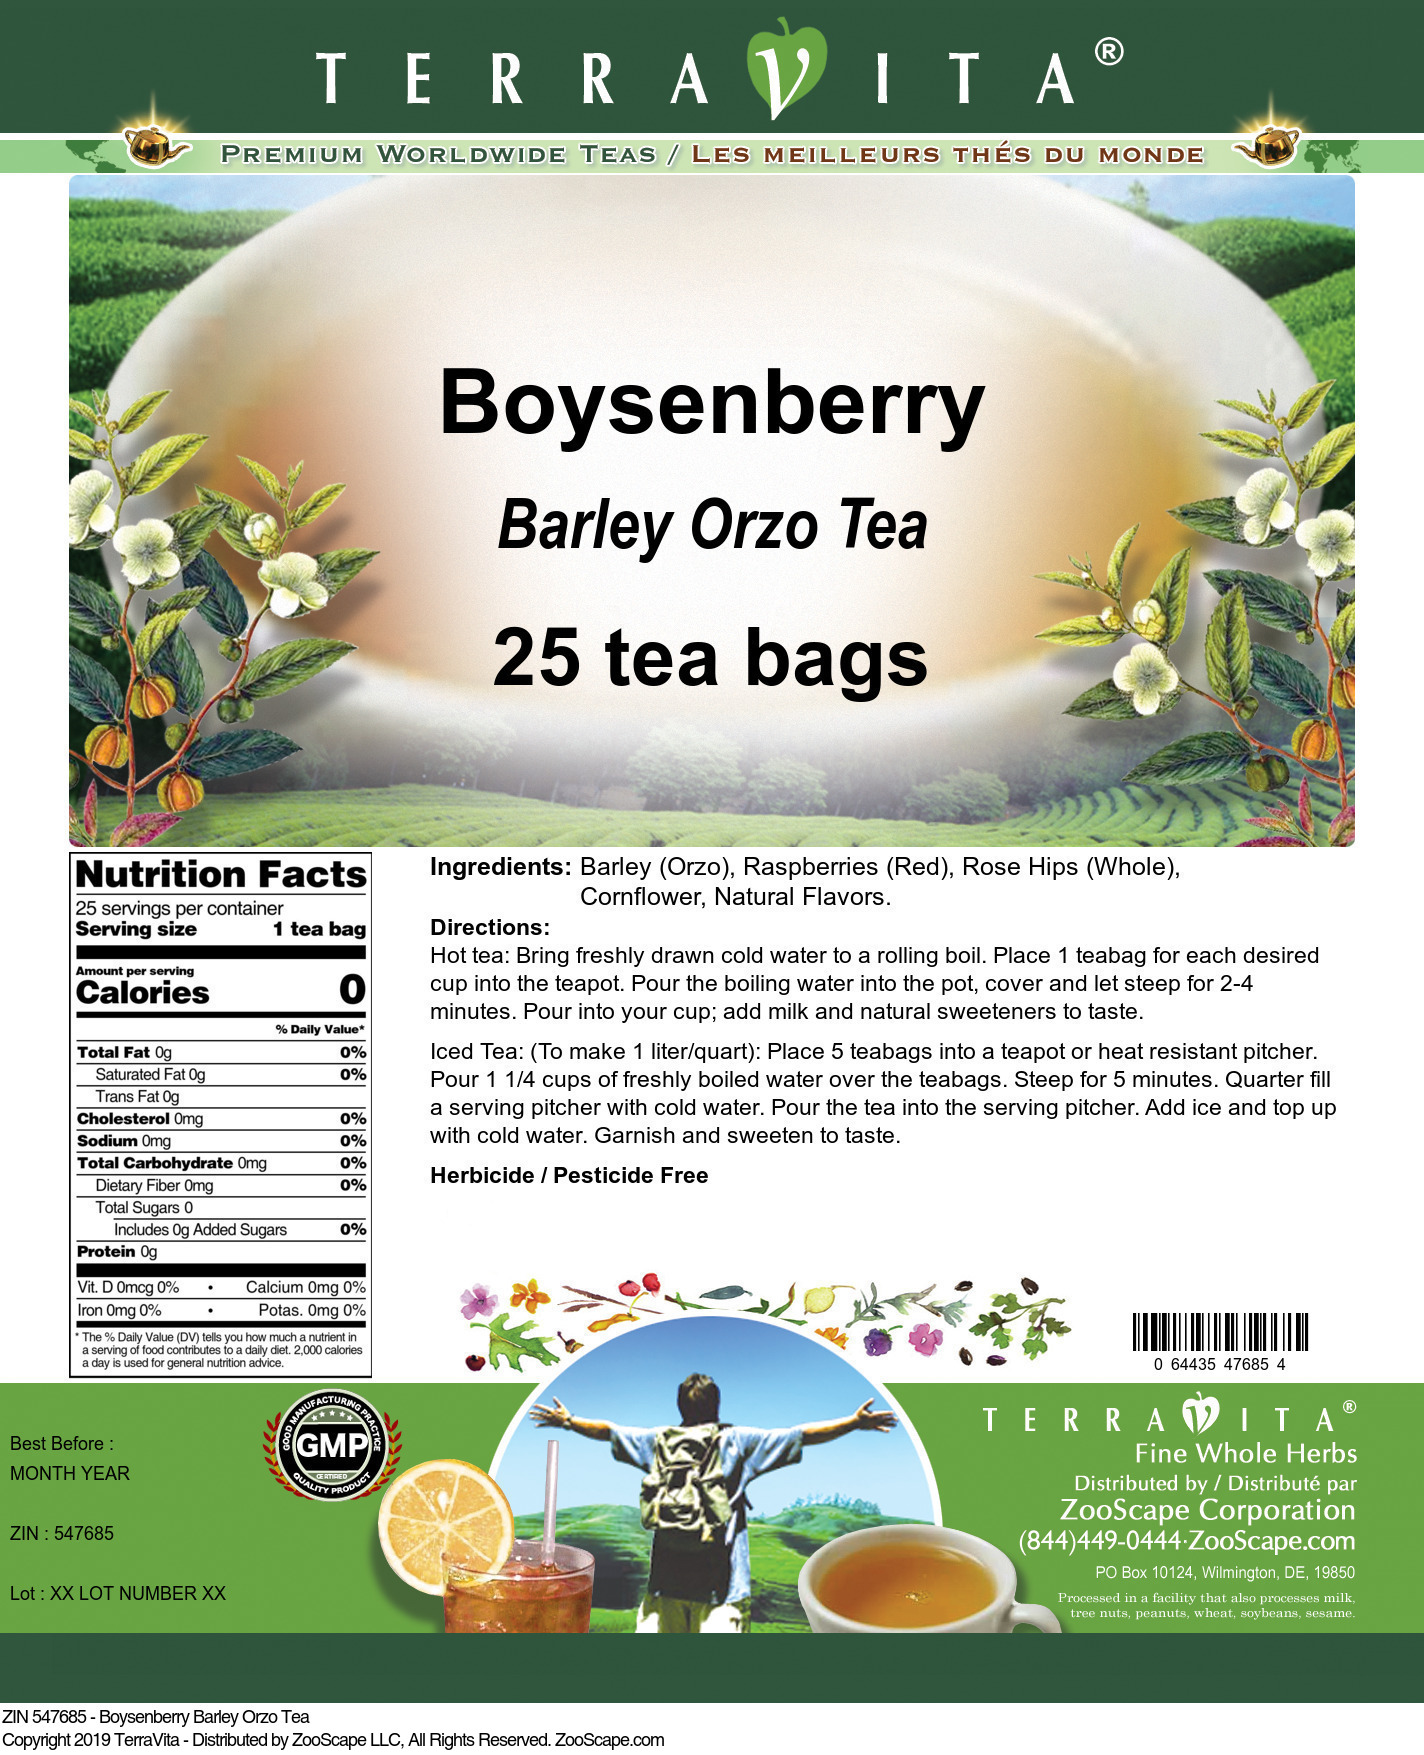 Boysenberry Barley Orzo Tea - Label